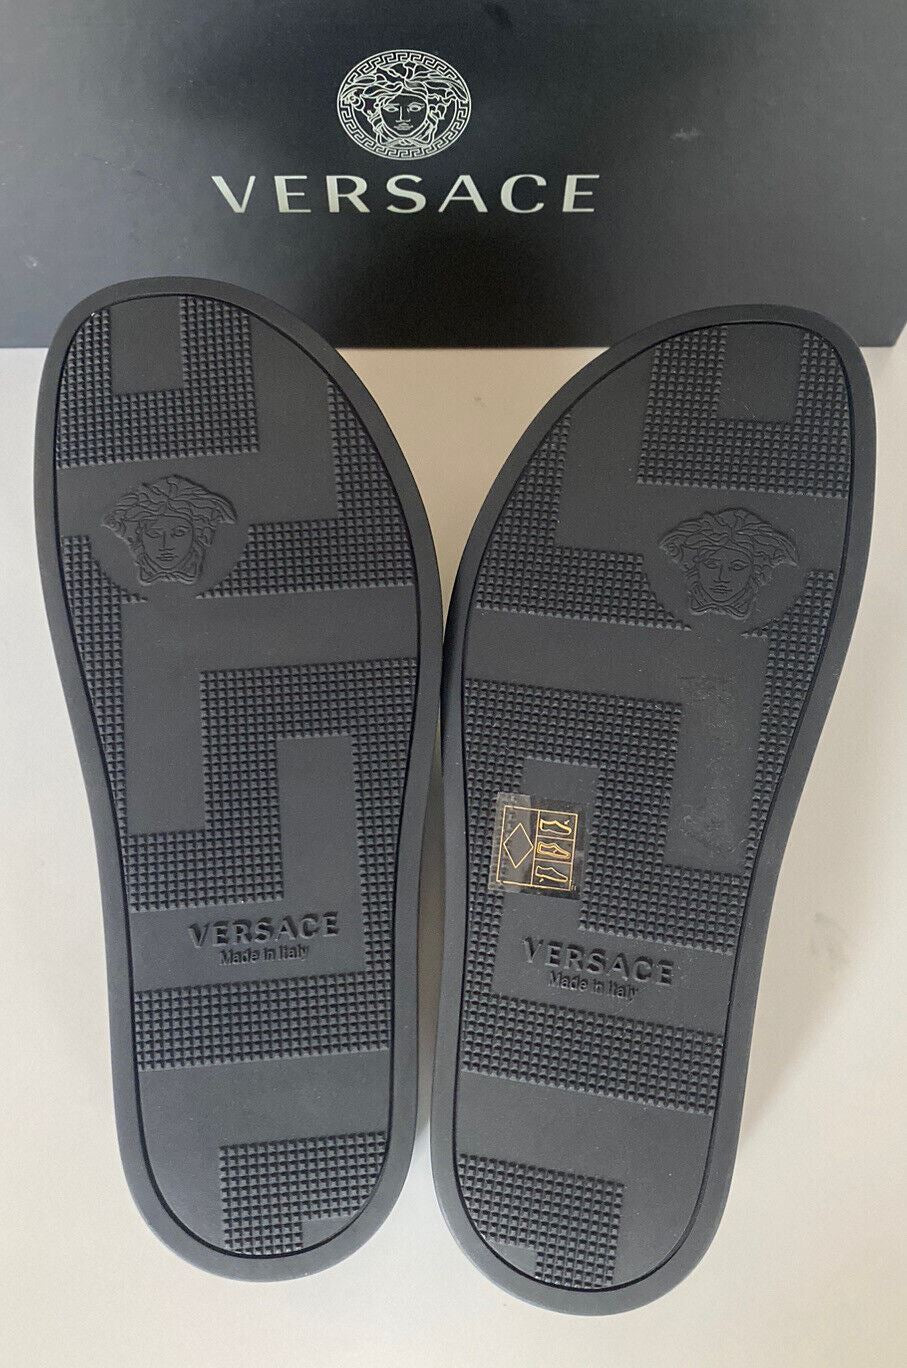 NIB $450 Versace Baroccoflage Pool Slides Sandals Black 8 US (41 Eu) IT DSU6516